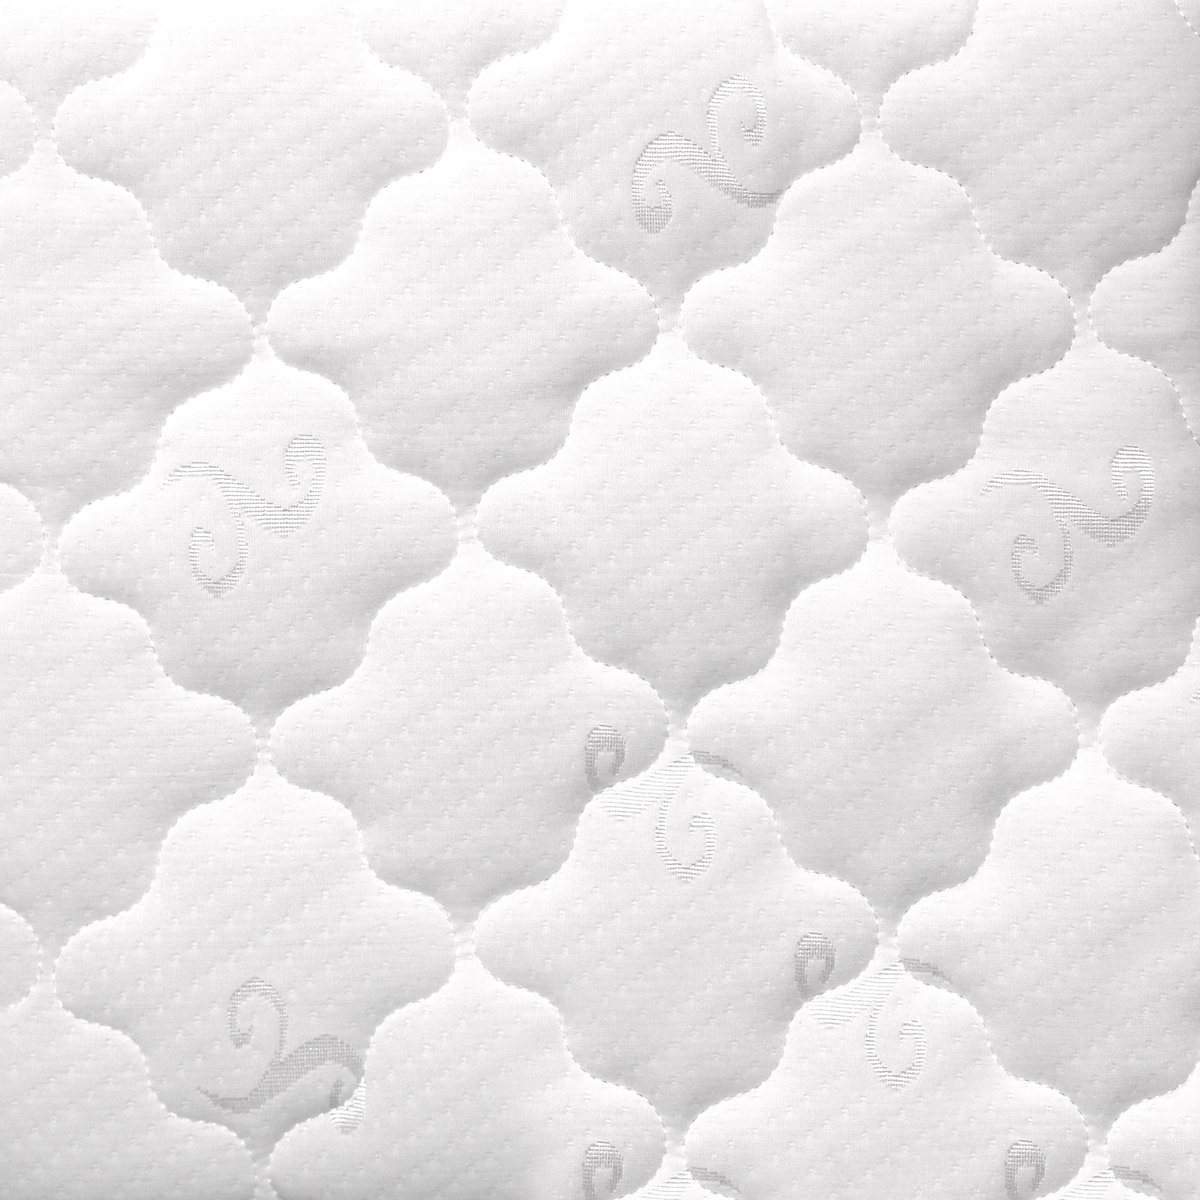 Cotton Home Fancy Bonel Spring Mattress 180x200+27cm-Pillow Top